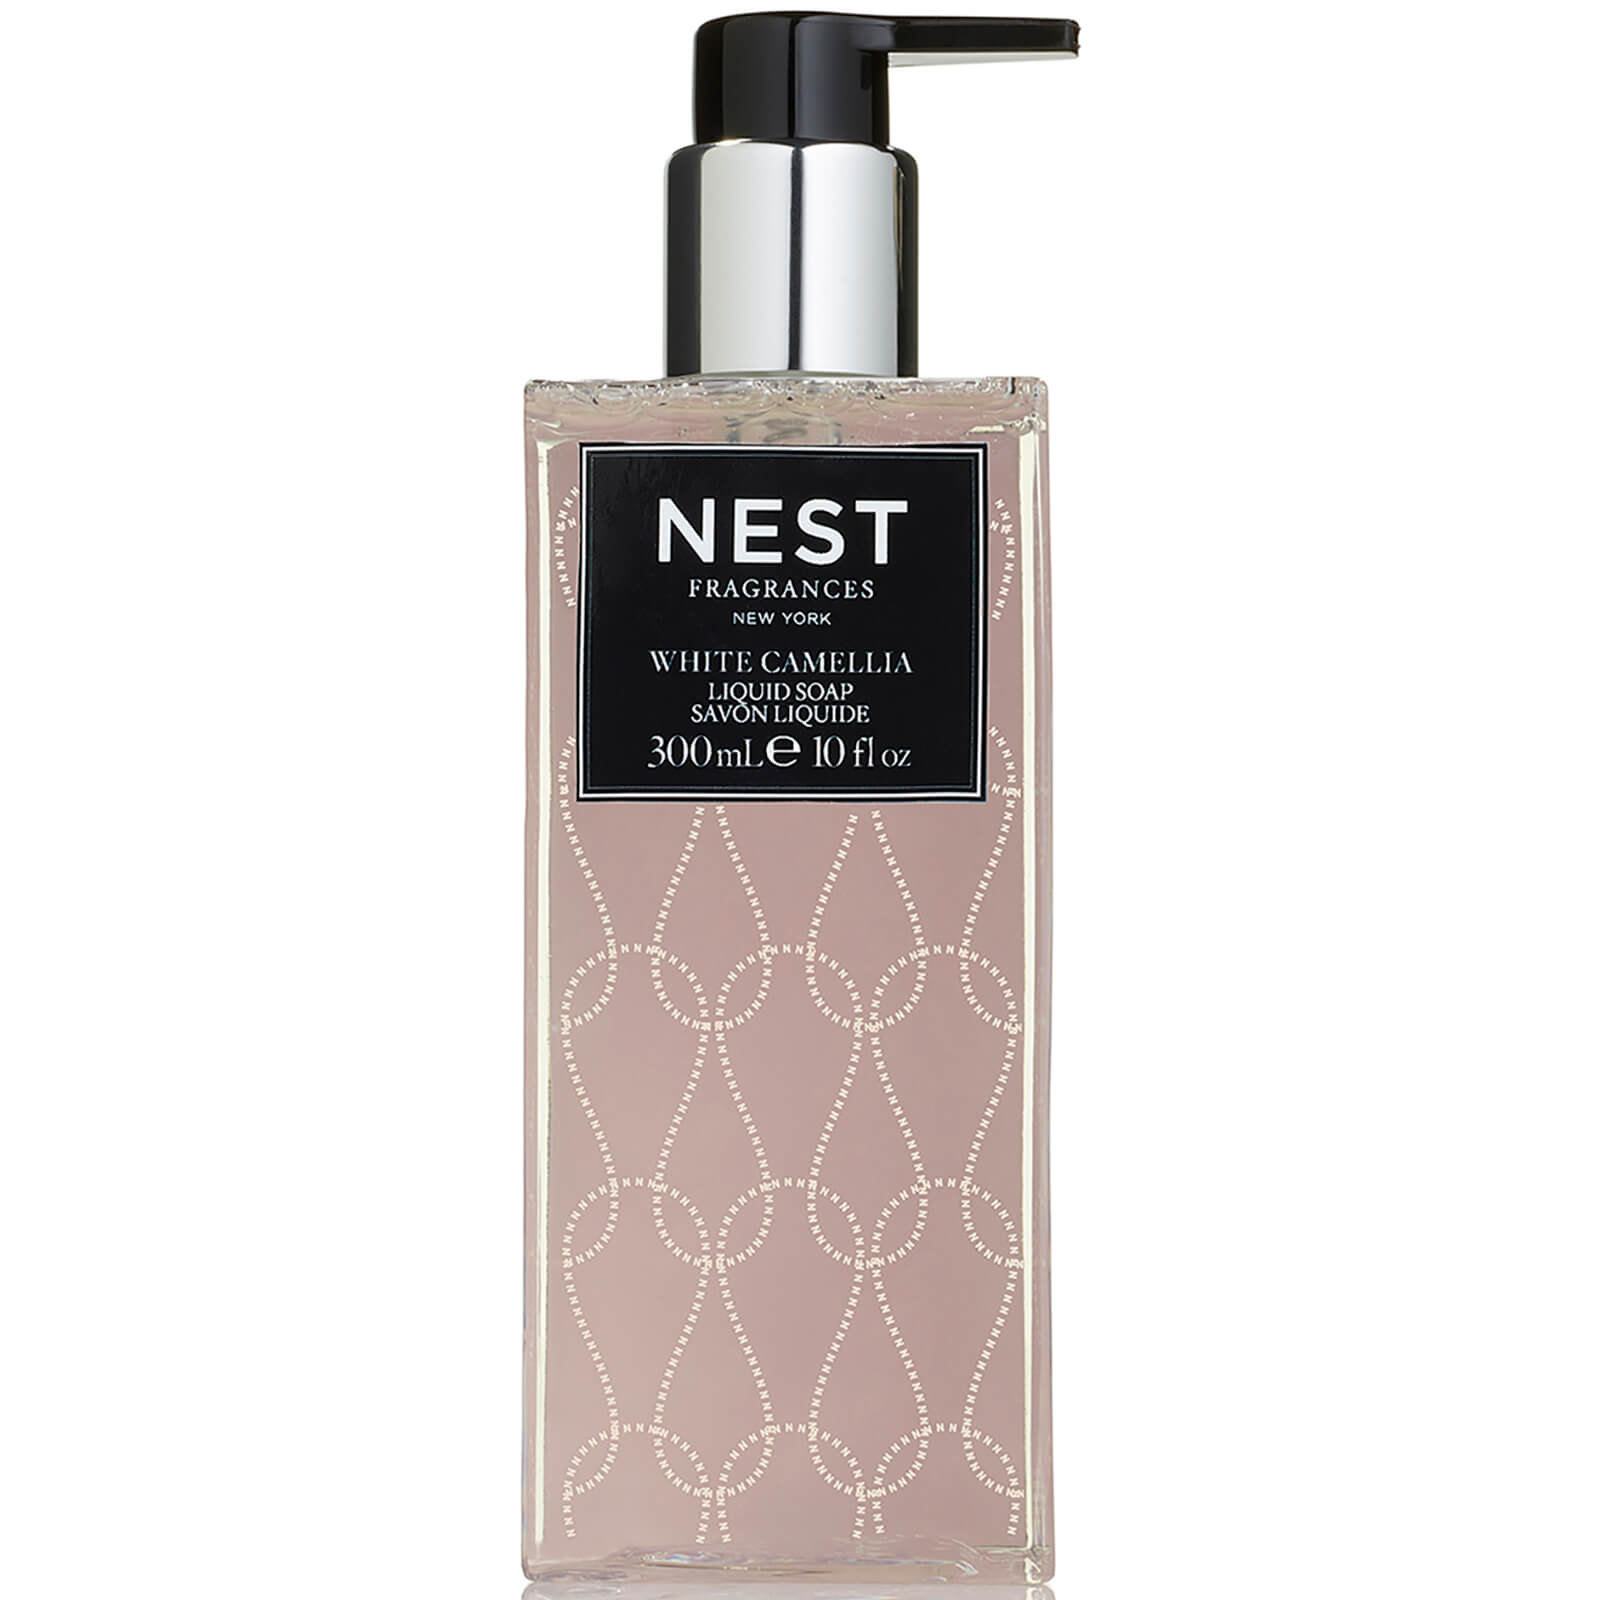 NEST Fragrances White Camellia Liquid Soap